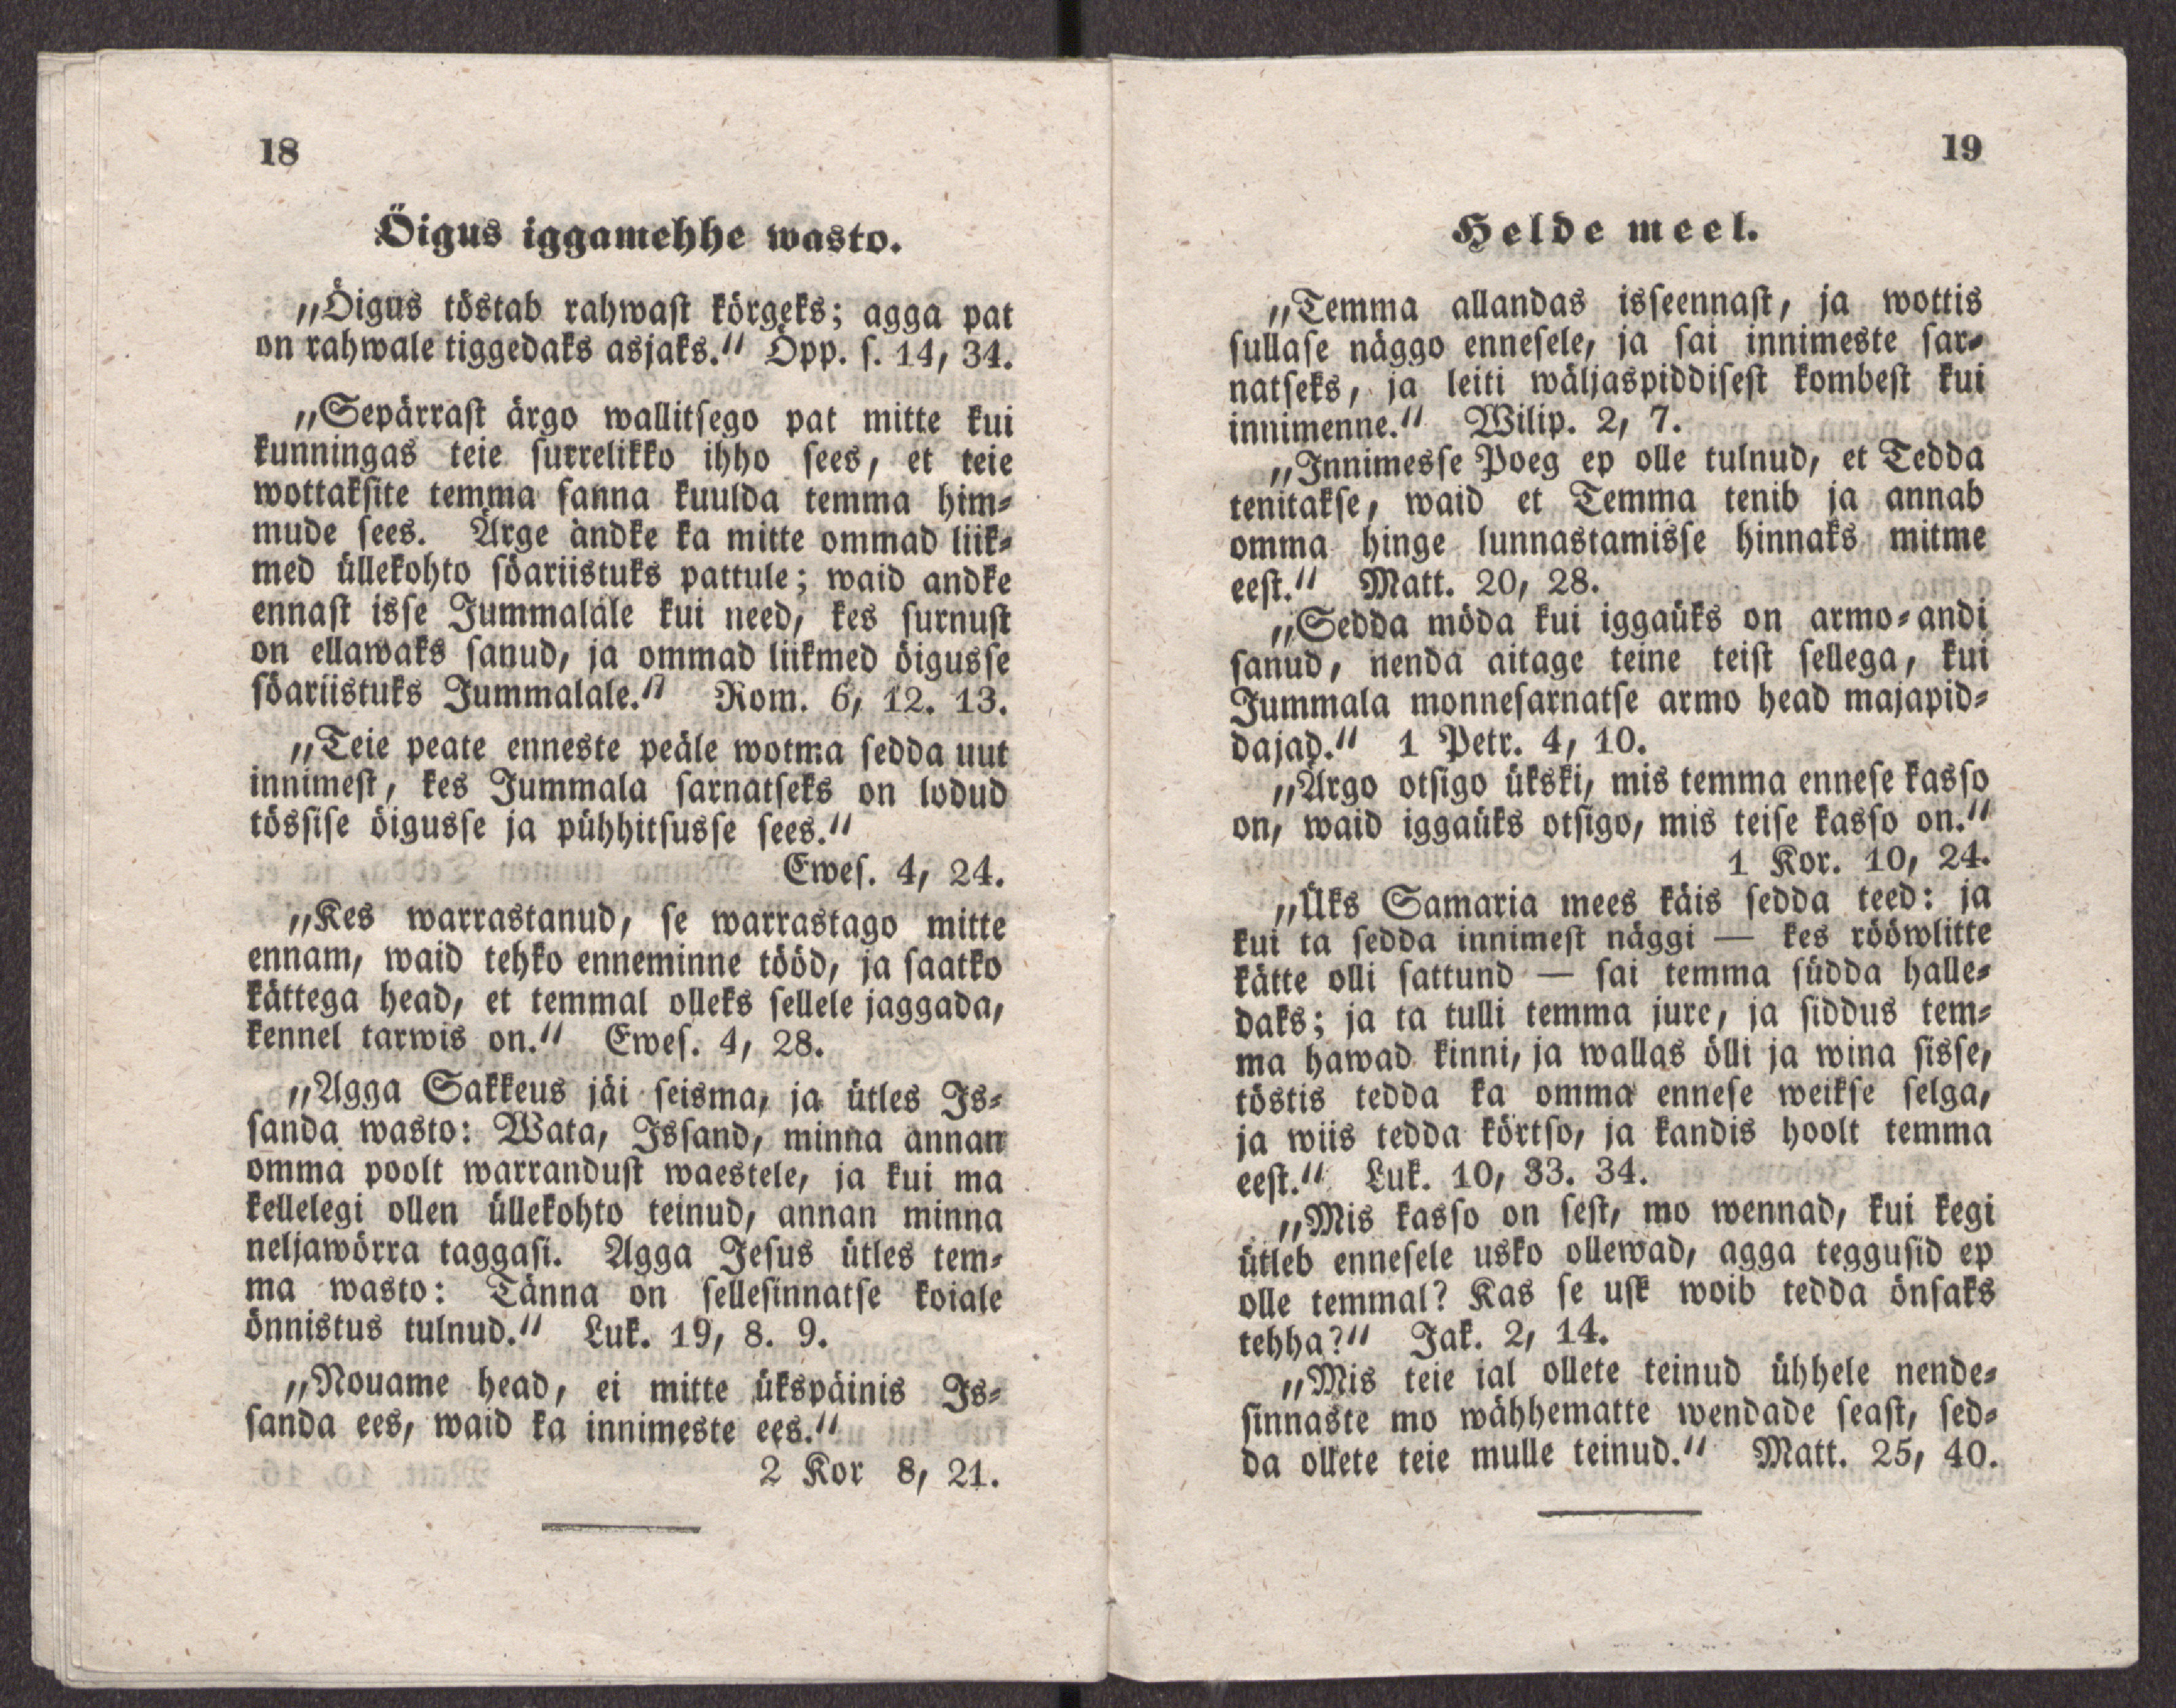 Risti-innimeste öige ello kombed (1847) | 11. Main body of text